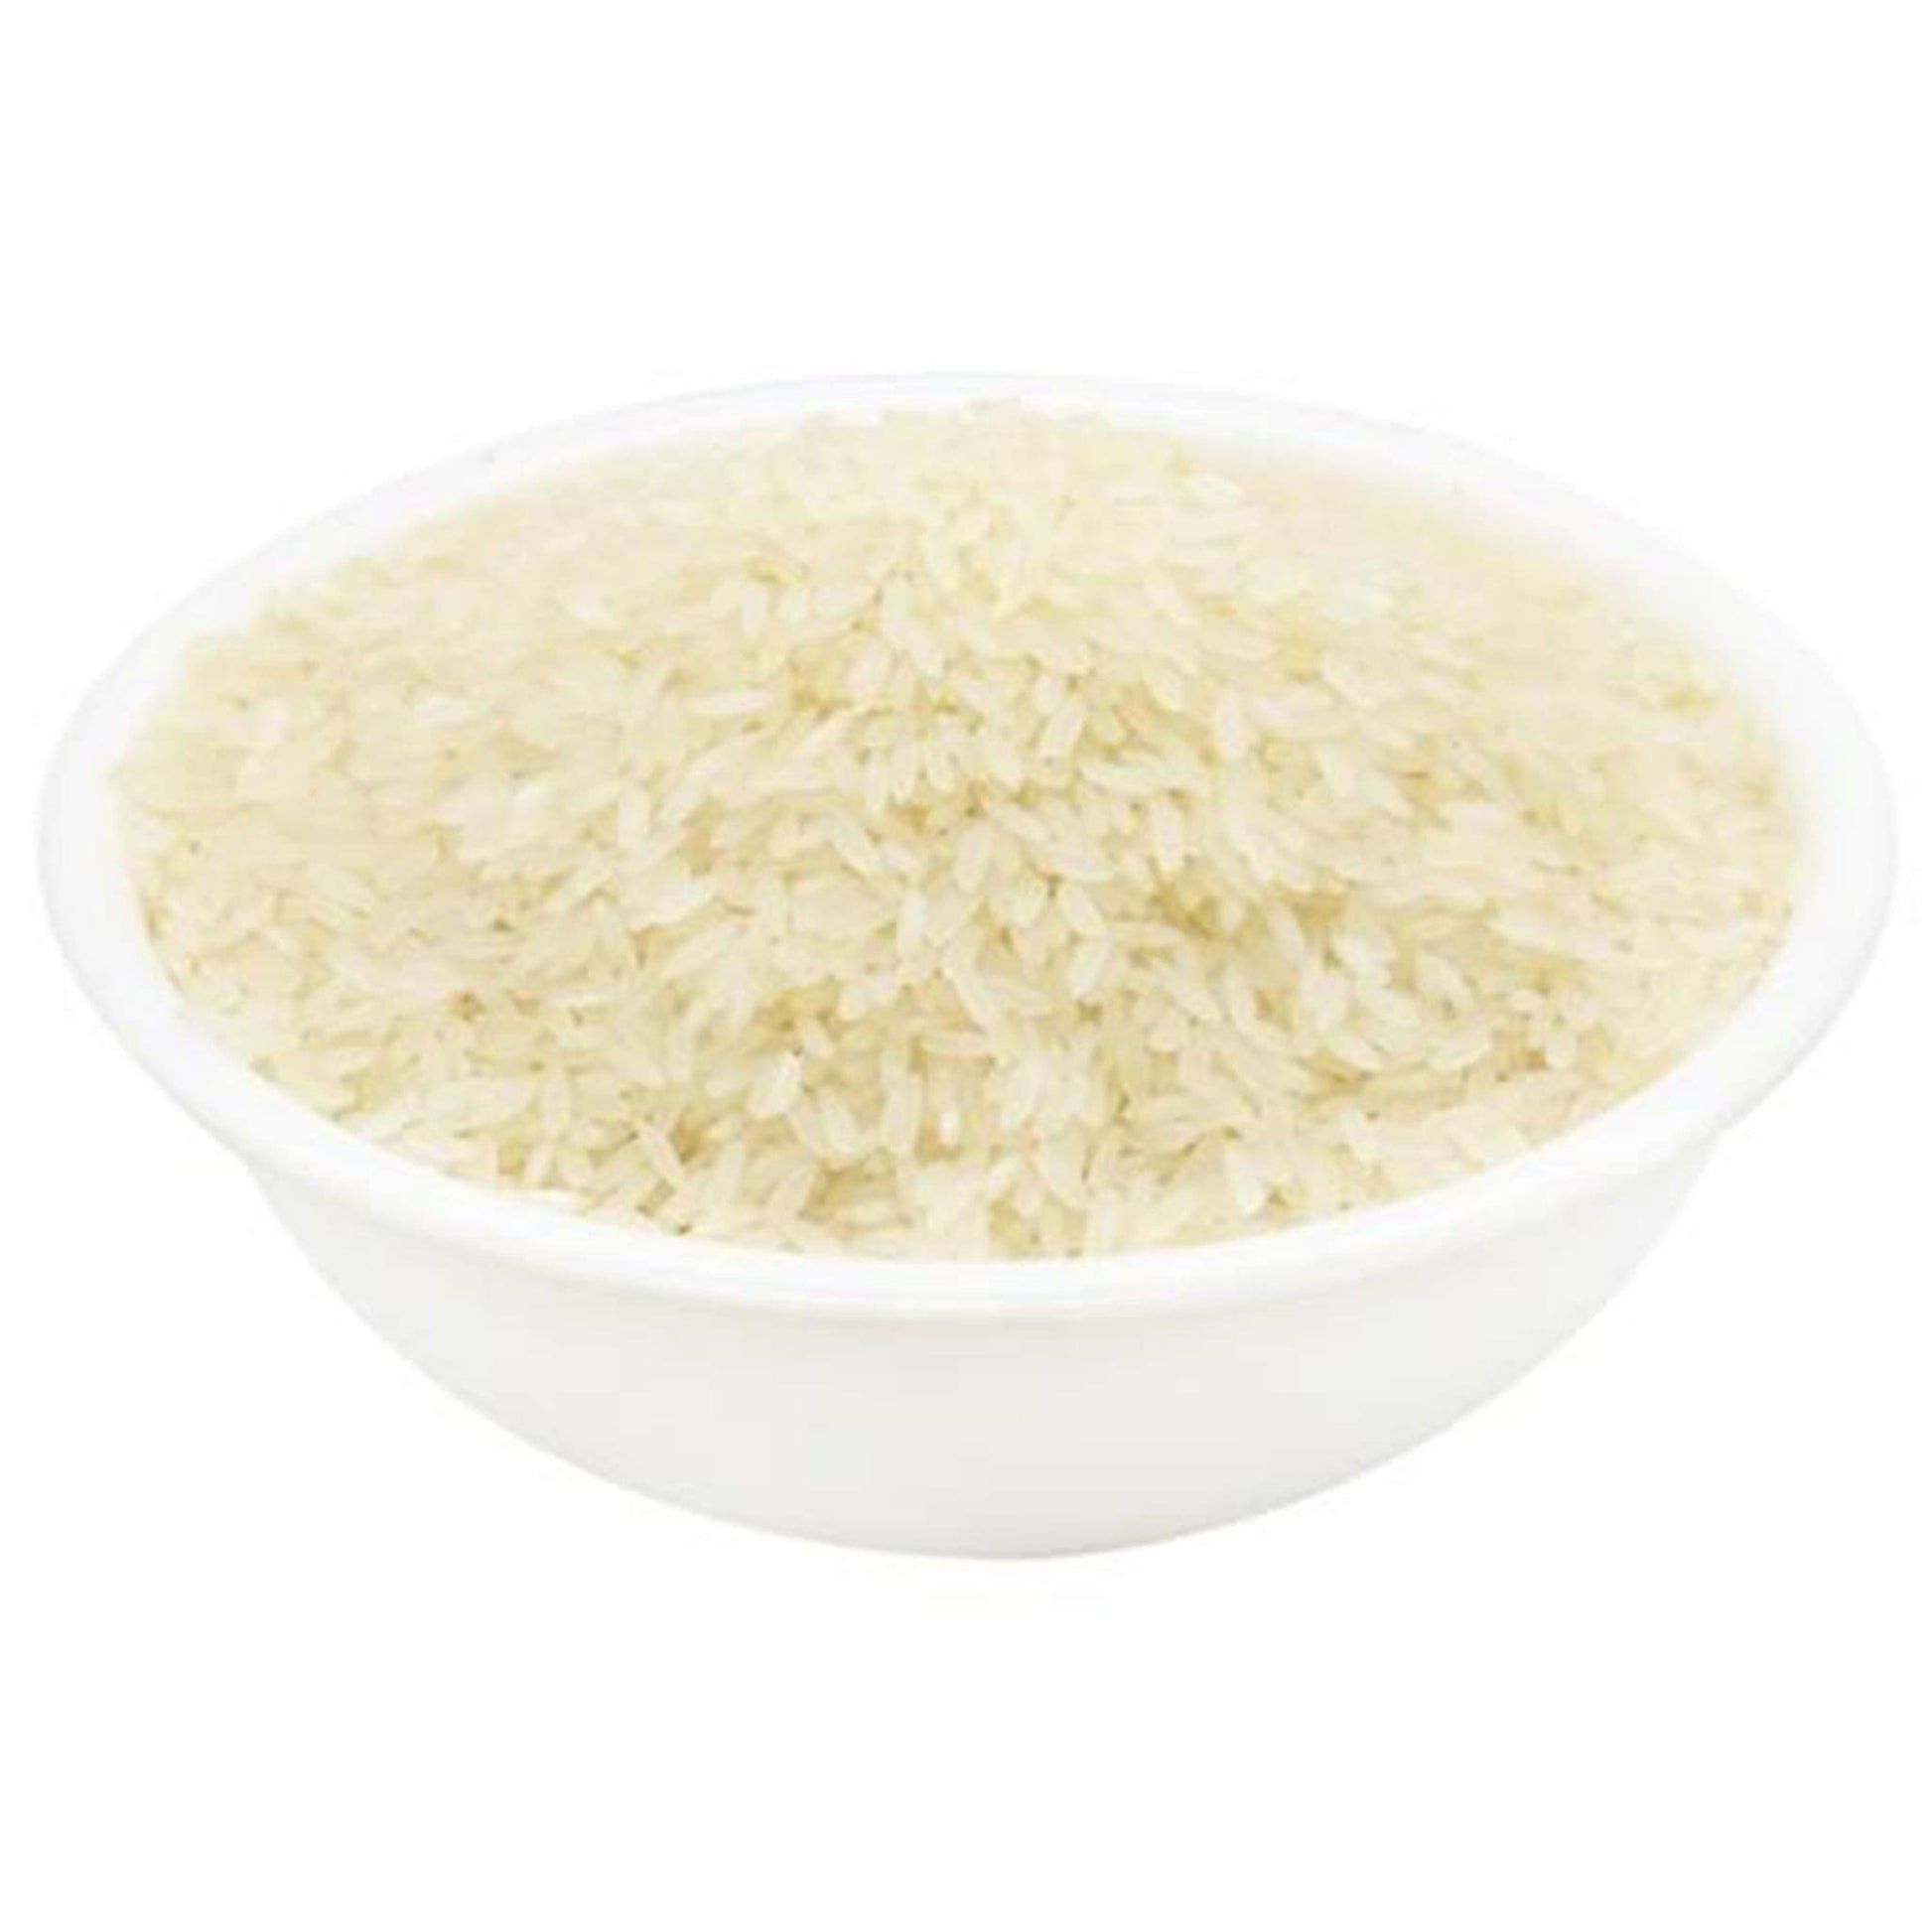 Ponni Boiled Rice (7052777226427)